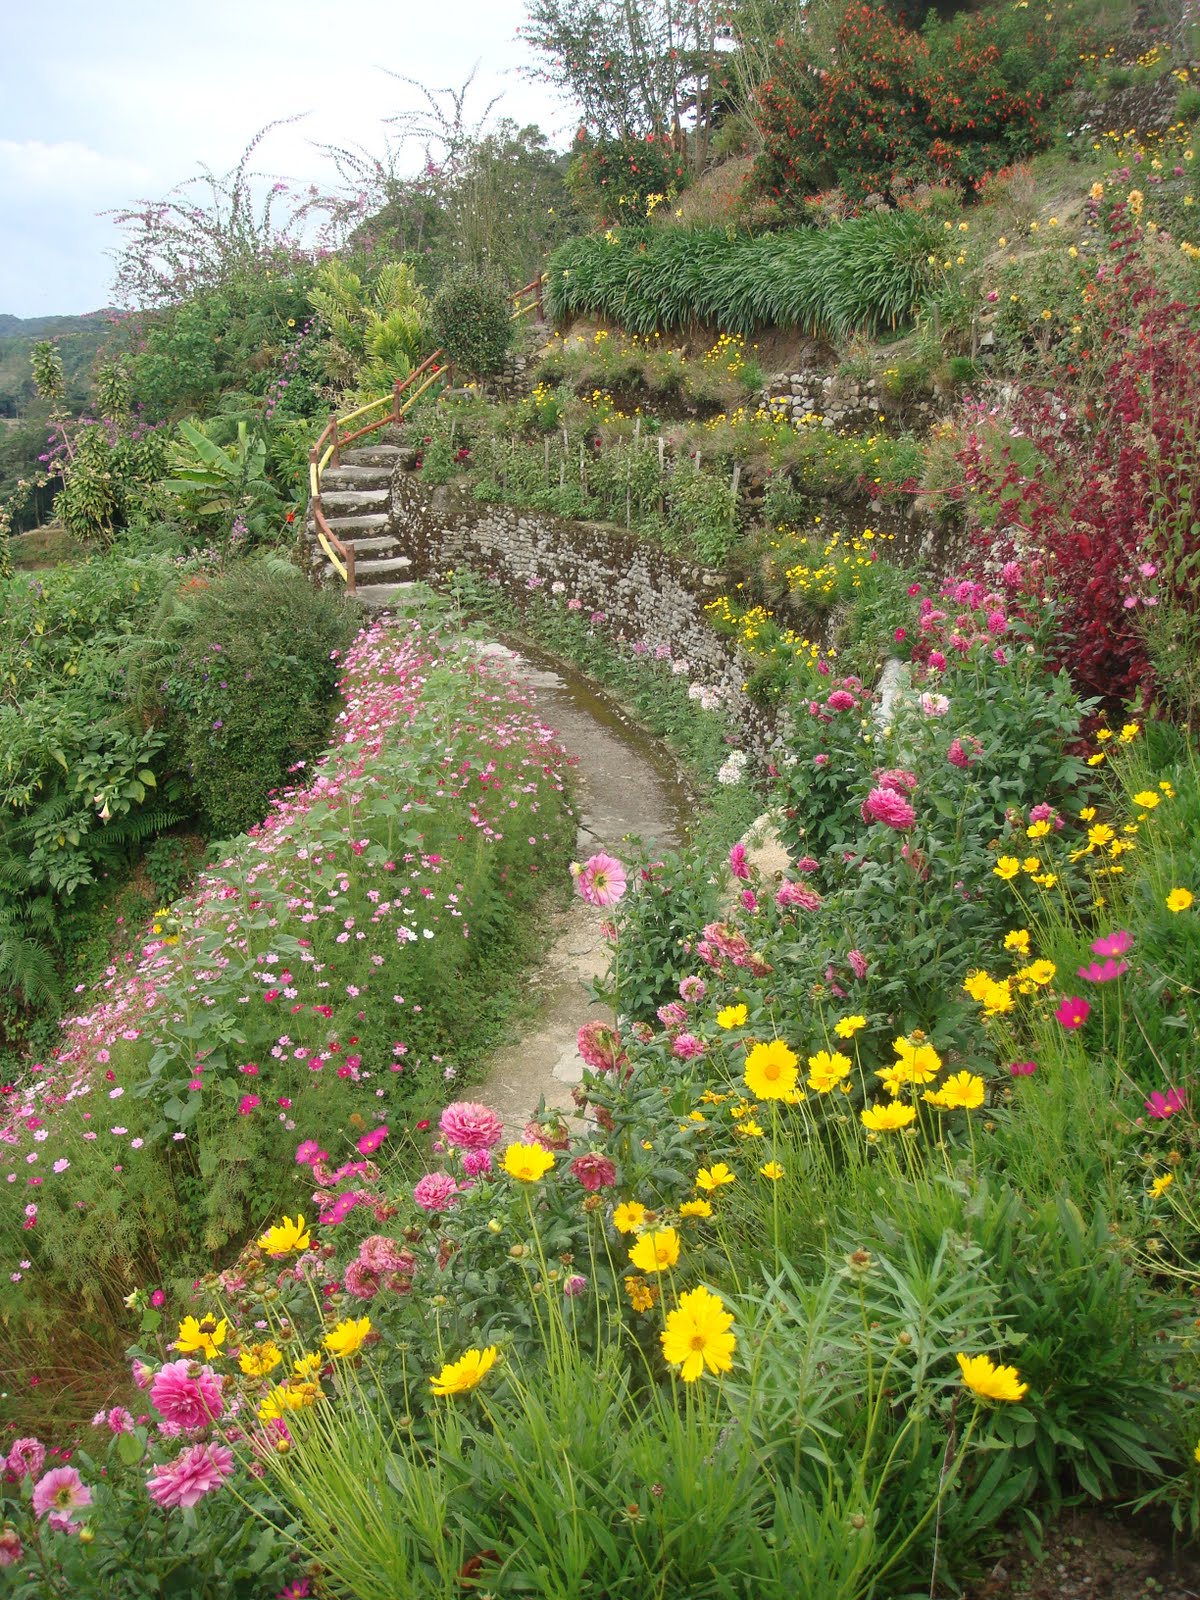 Gardening Dream Inspire: Rose Center In Cameron Highlands